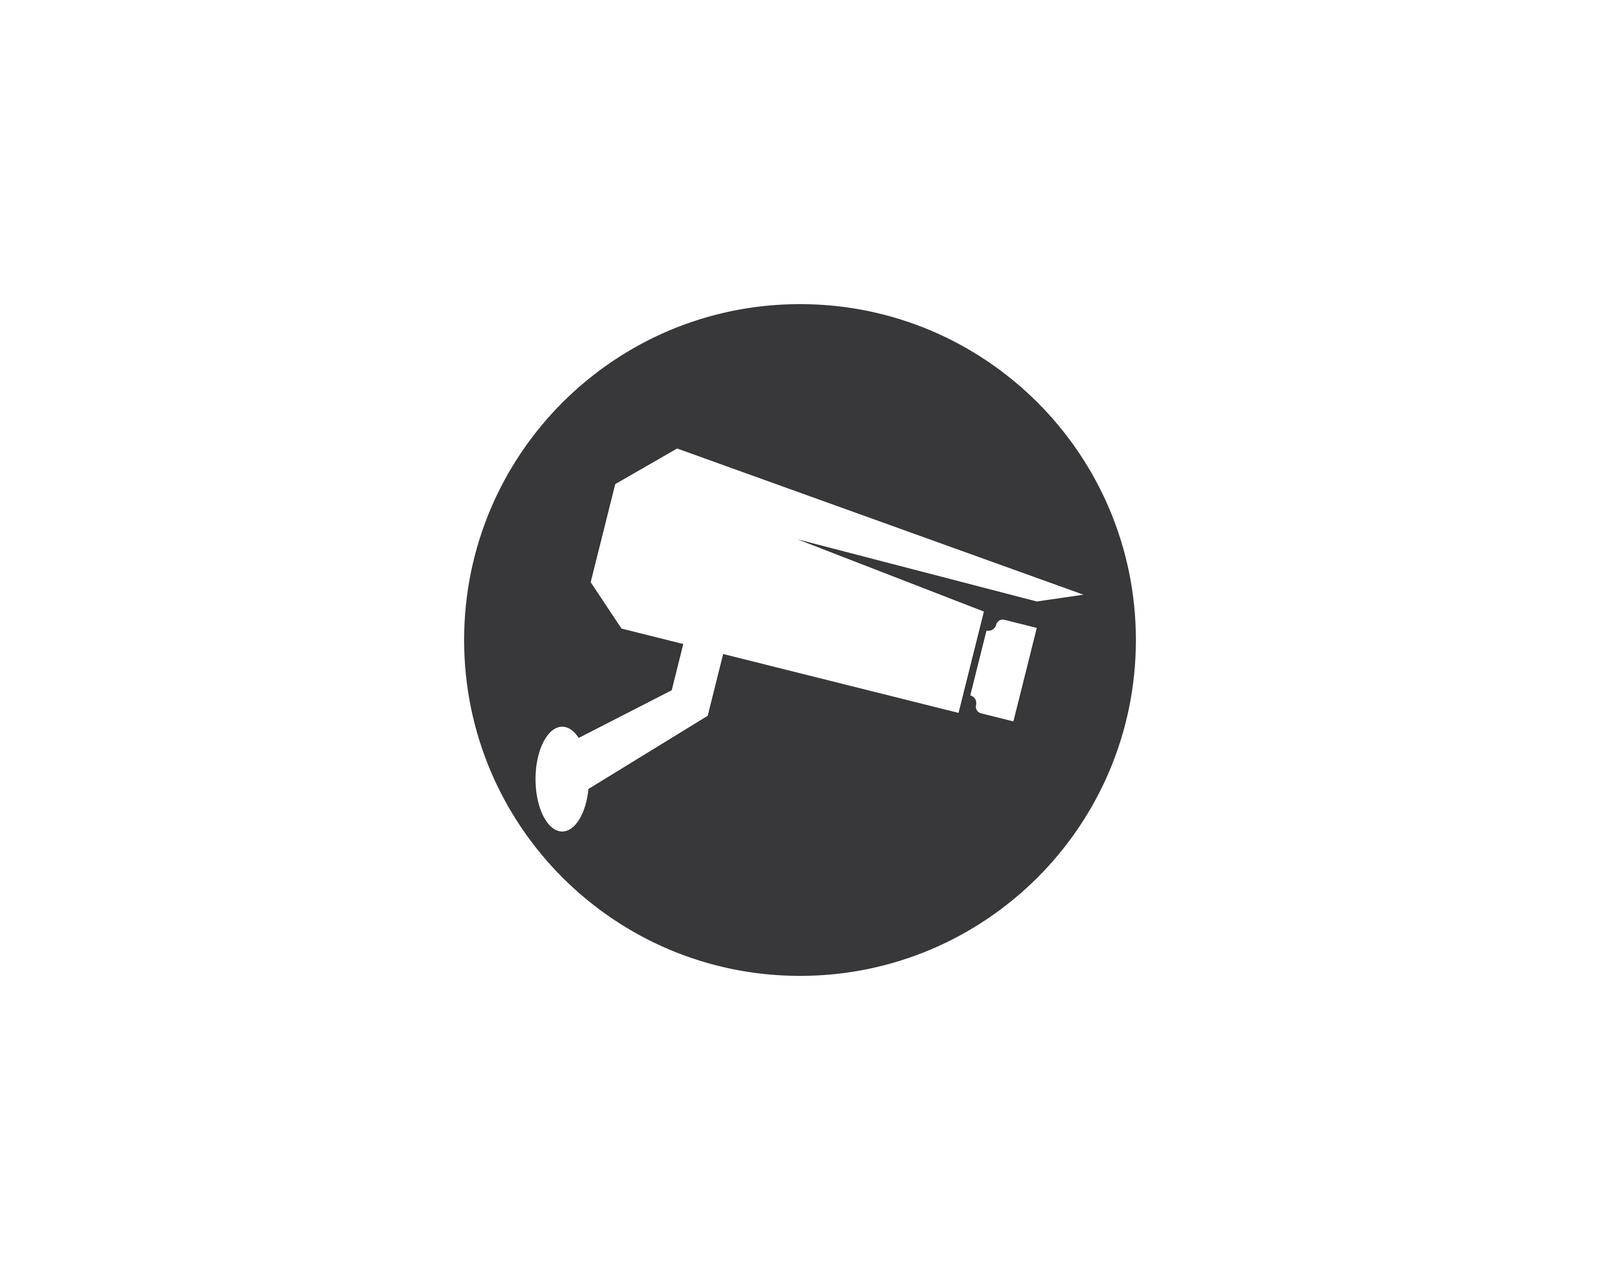 CCTV icon vector by awk